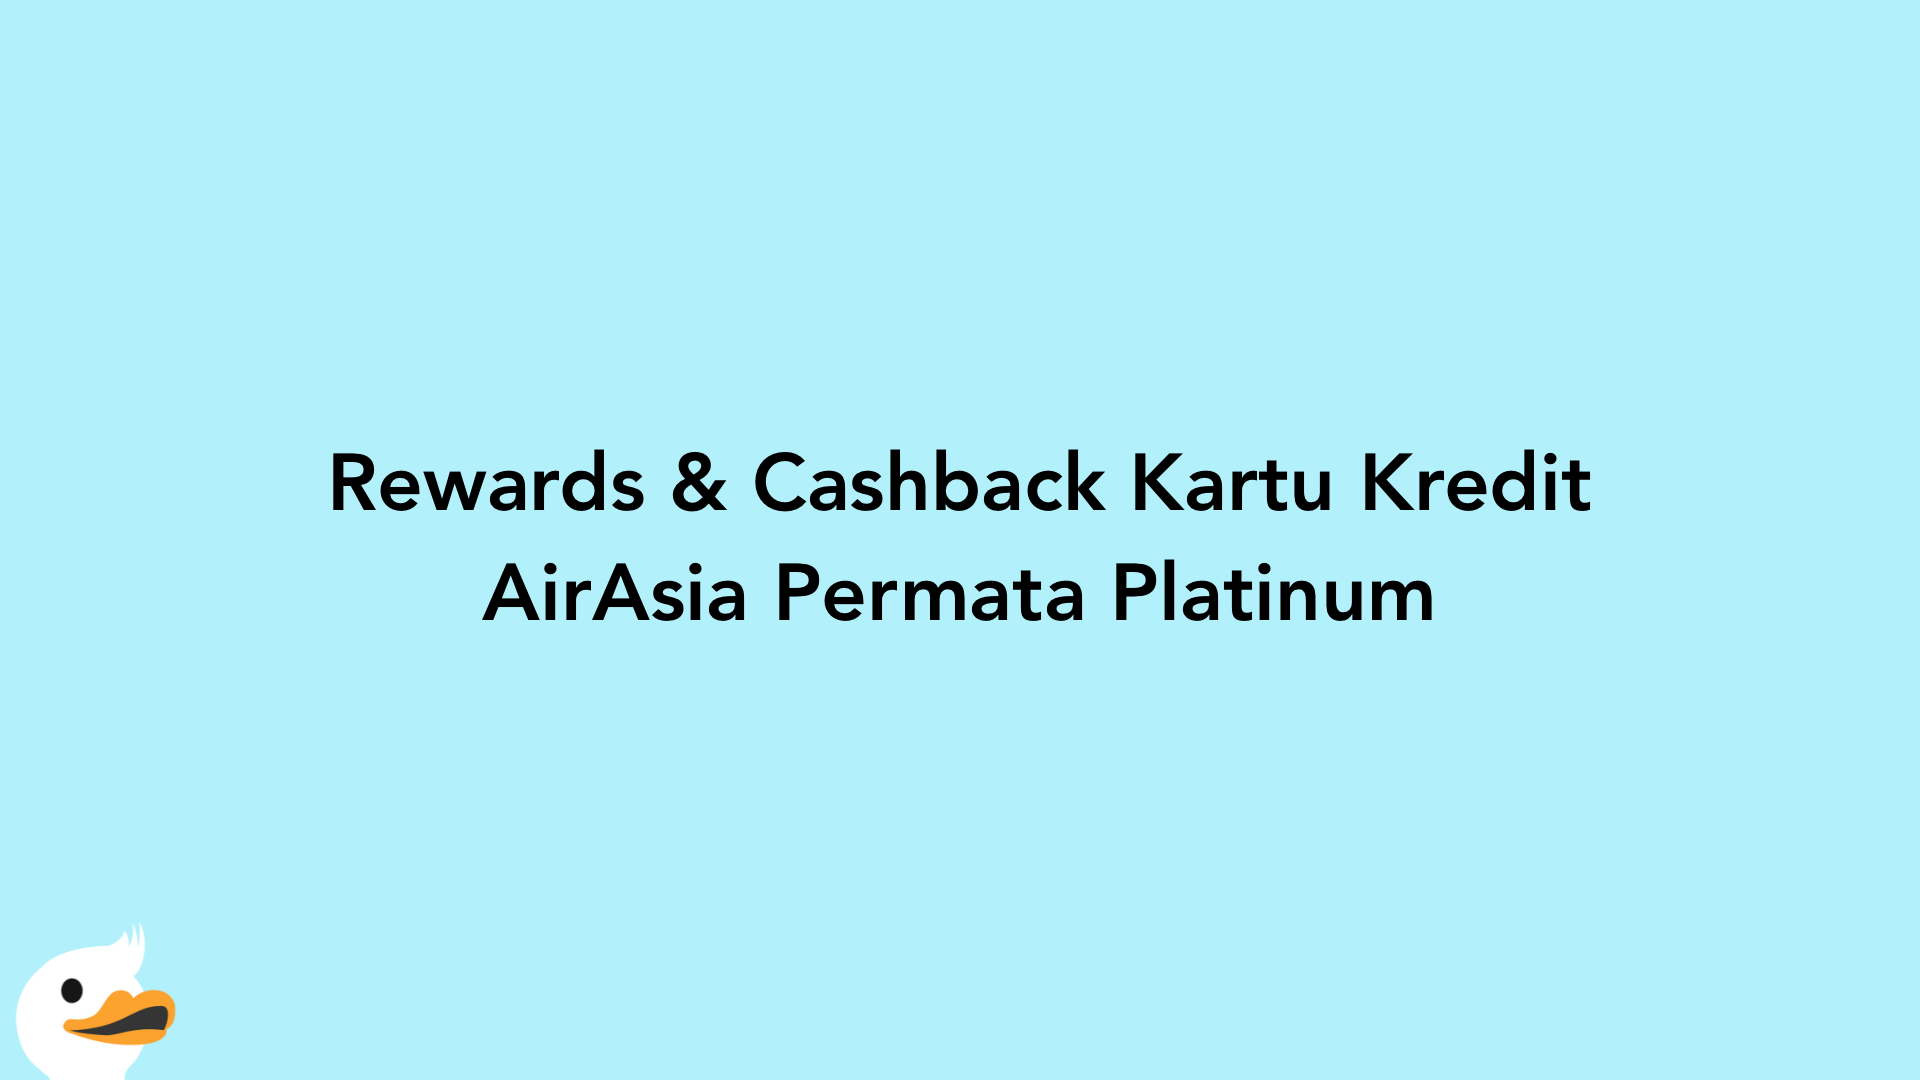 Rewards & Cashback Kartu Kredit AirAsia Permata Platinum